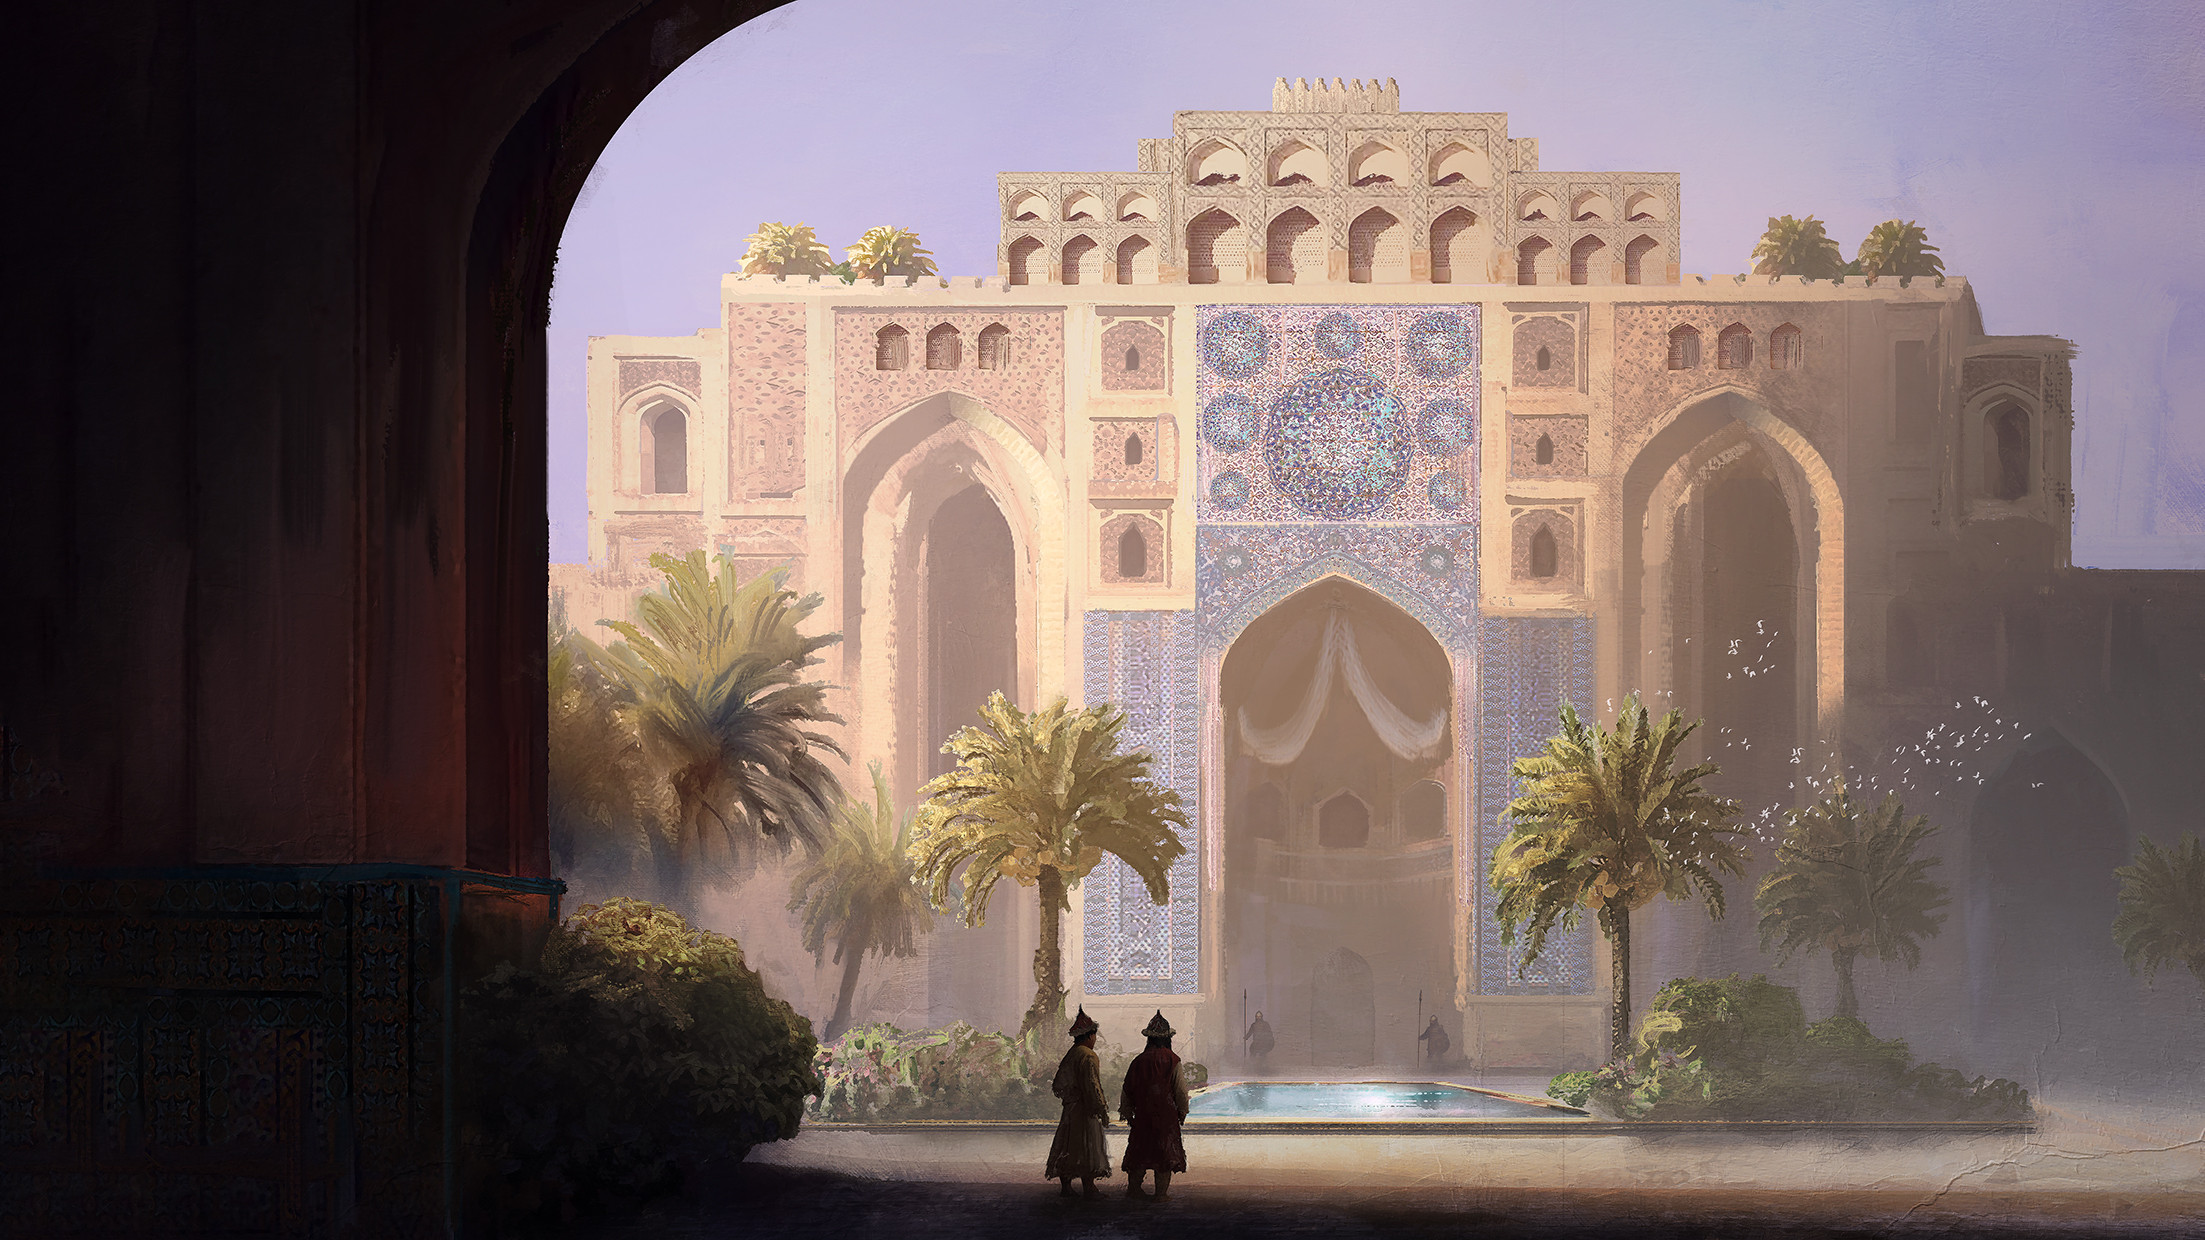 The Abbasid Palace